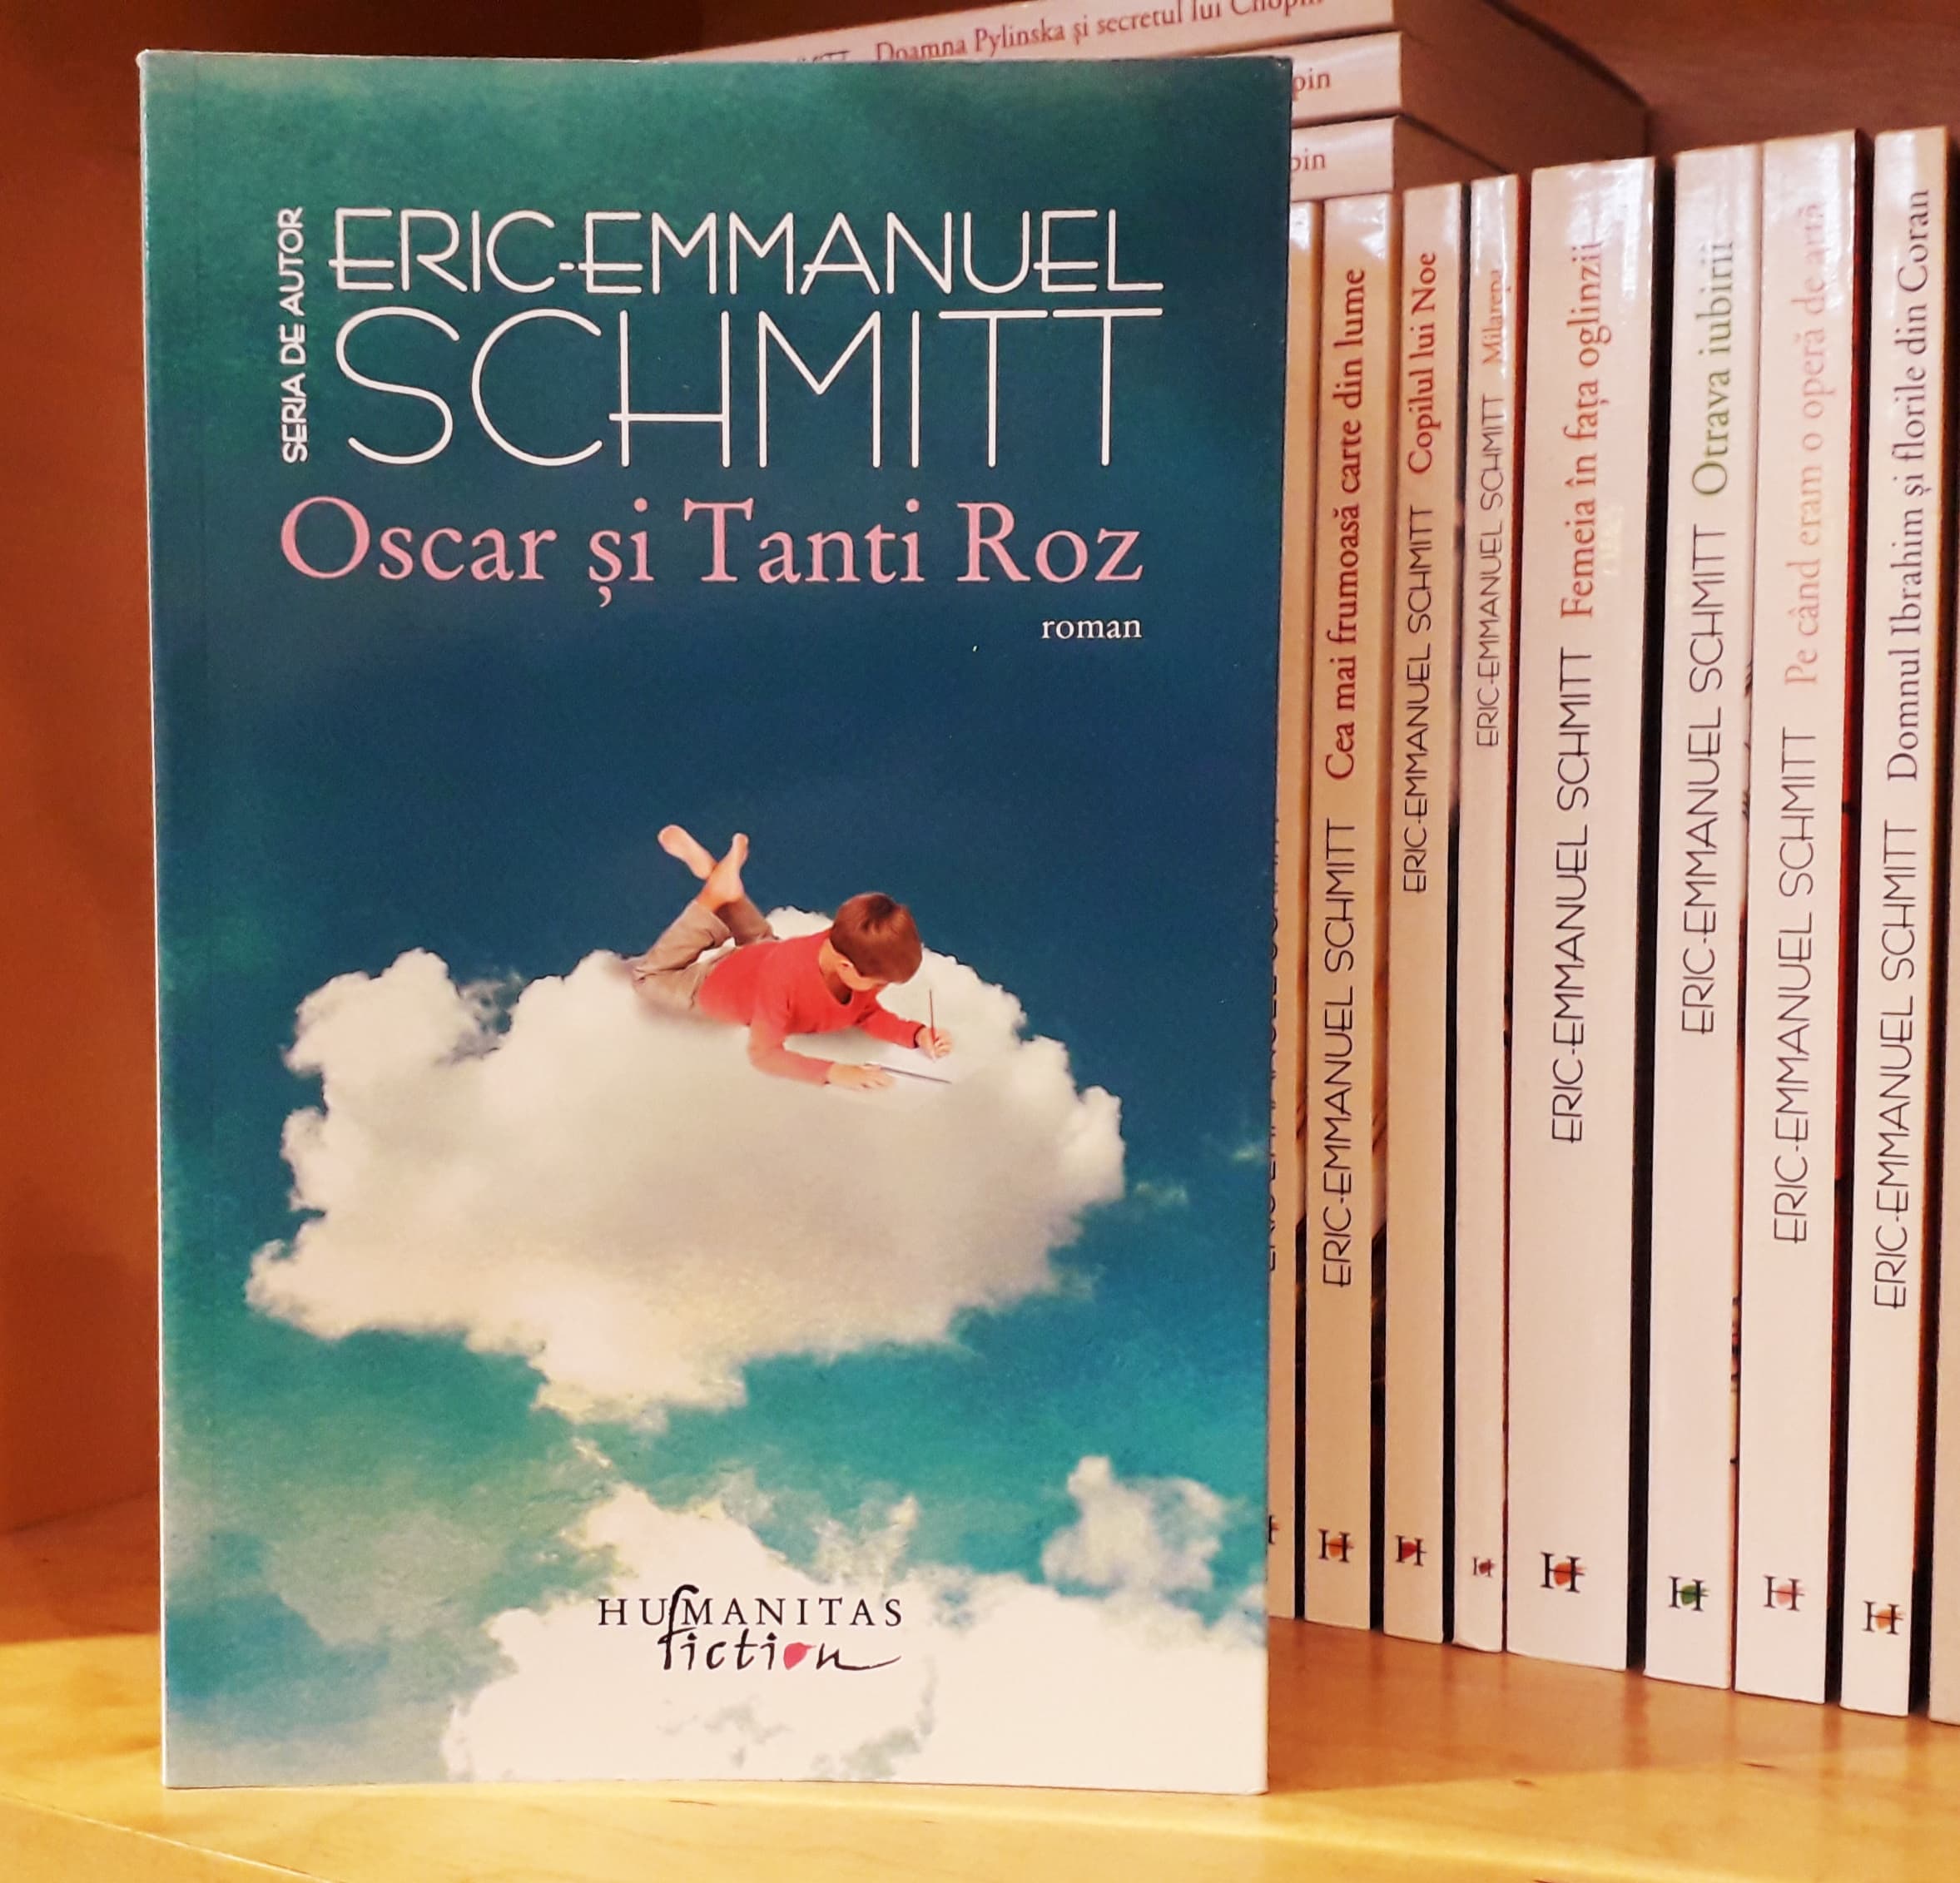 Ræv Kom forbi for at vide det Ferie Episodul06. Oscar și Tanti Roz - Eric-Emmanuel Schmitt - Dream.Seek.Love.